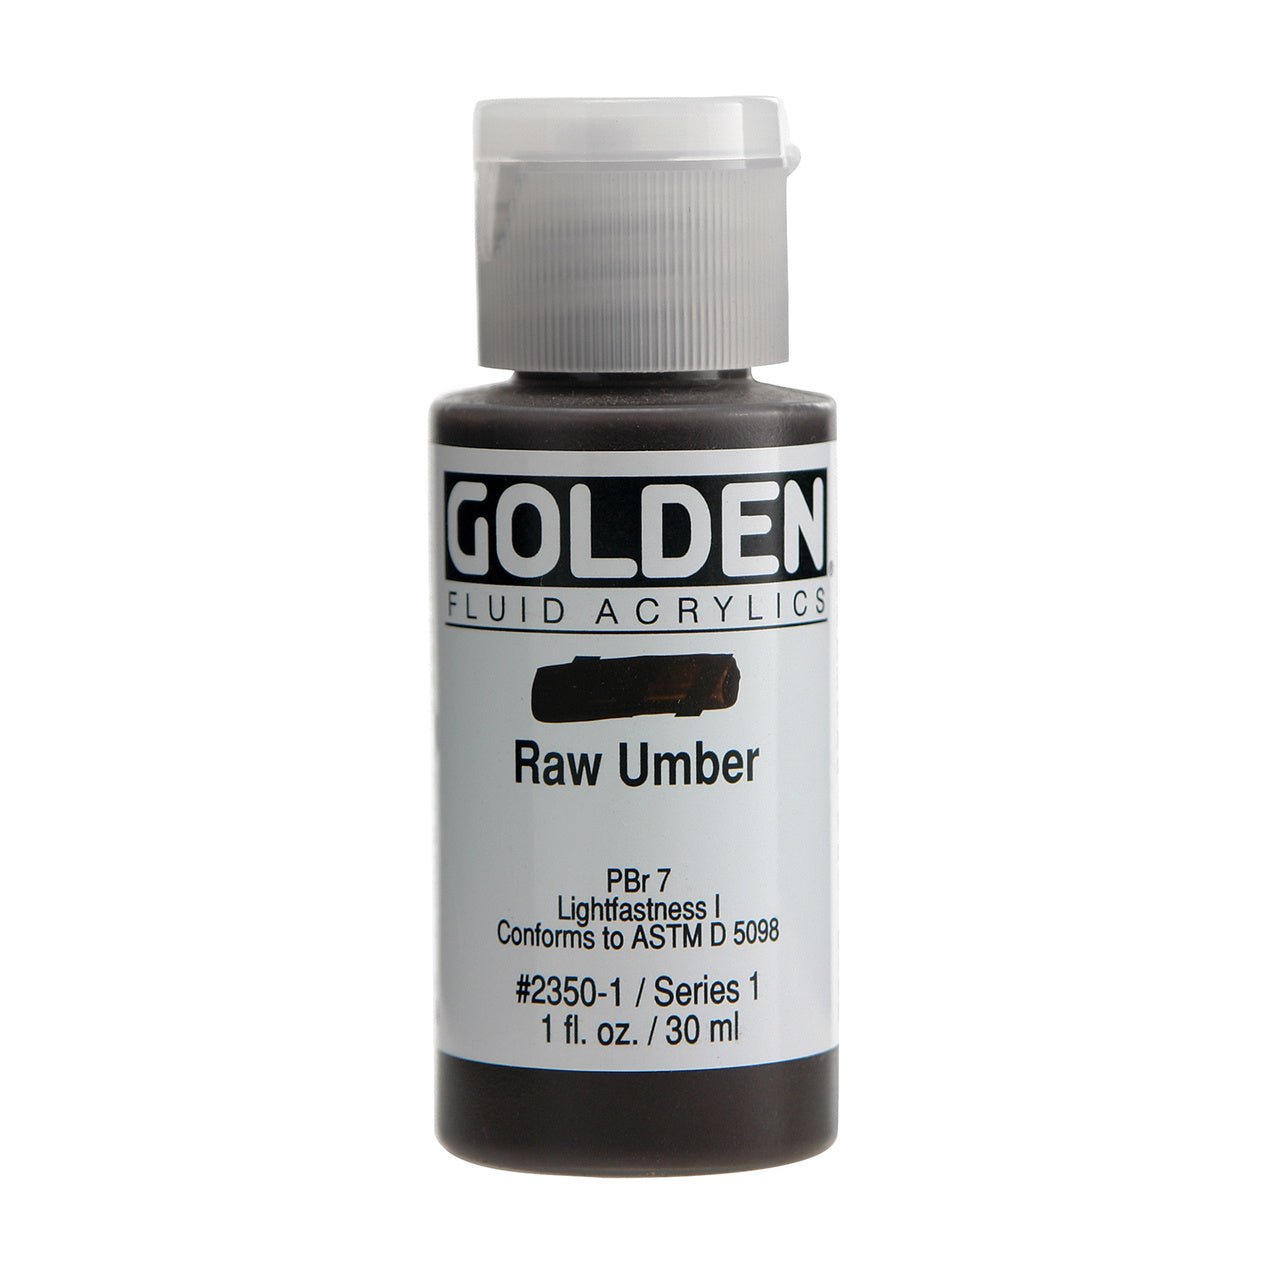 Golden Fluid Acrylic Raw Umber 1 oz - merriartist.com